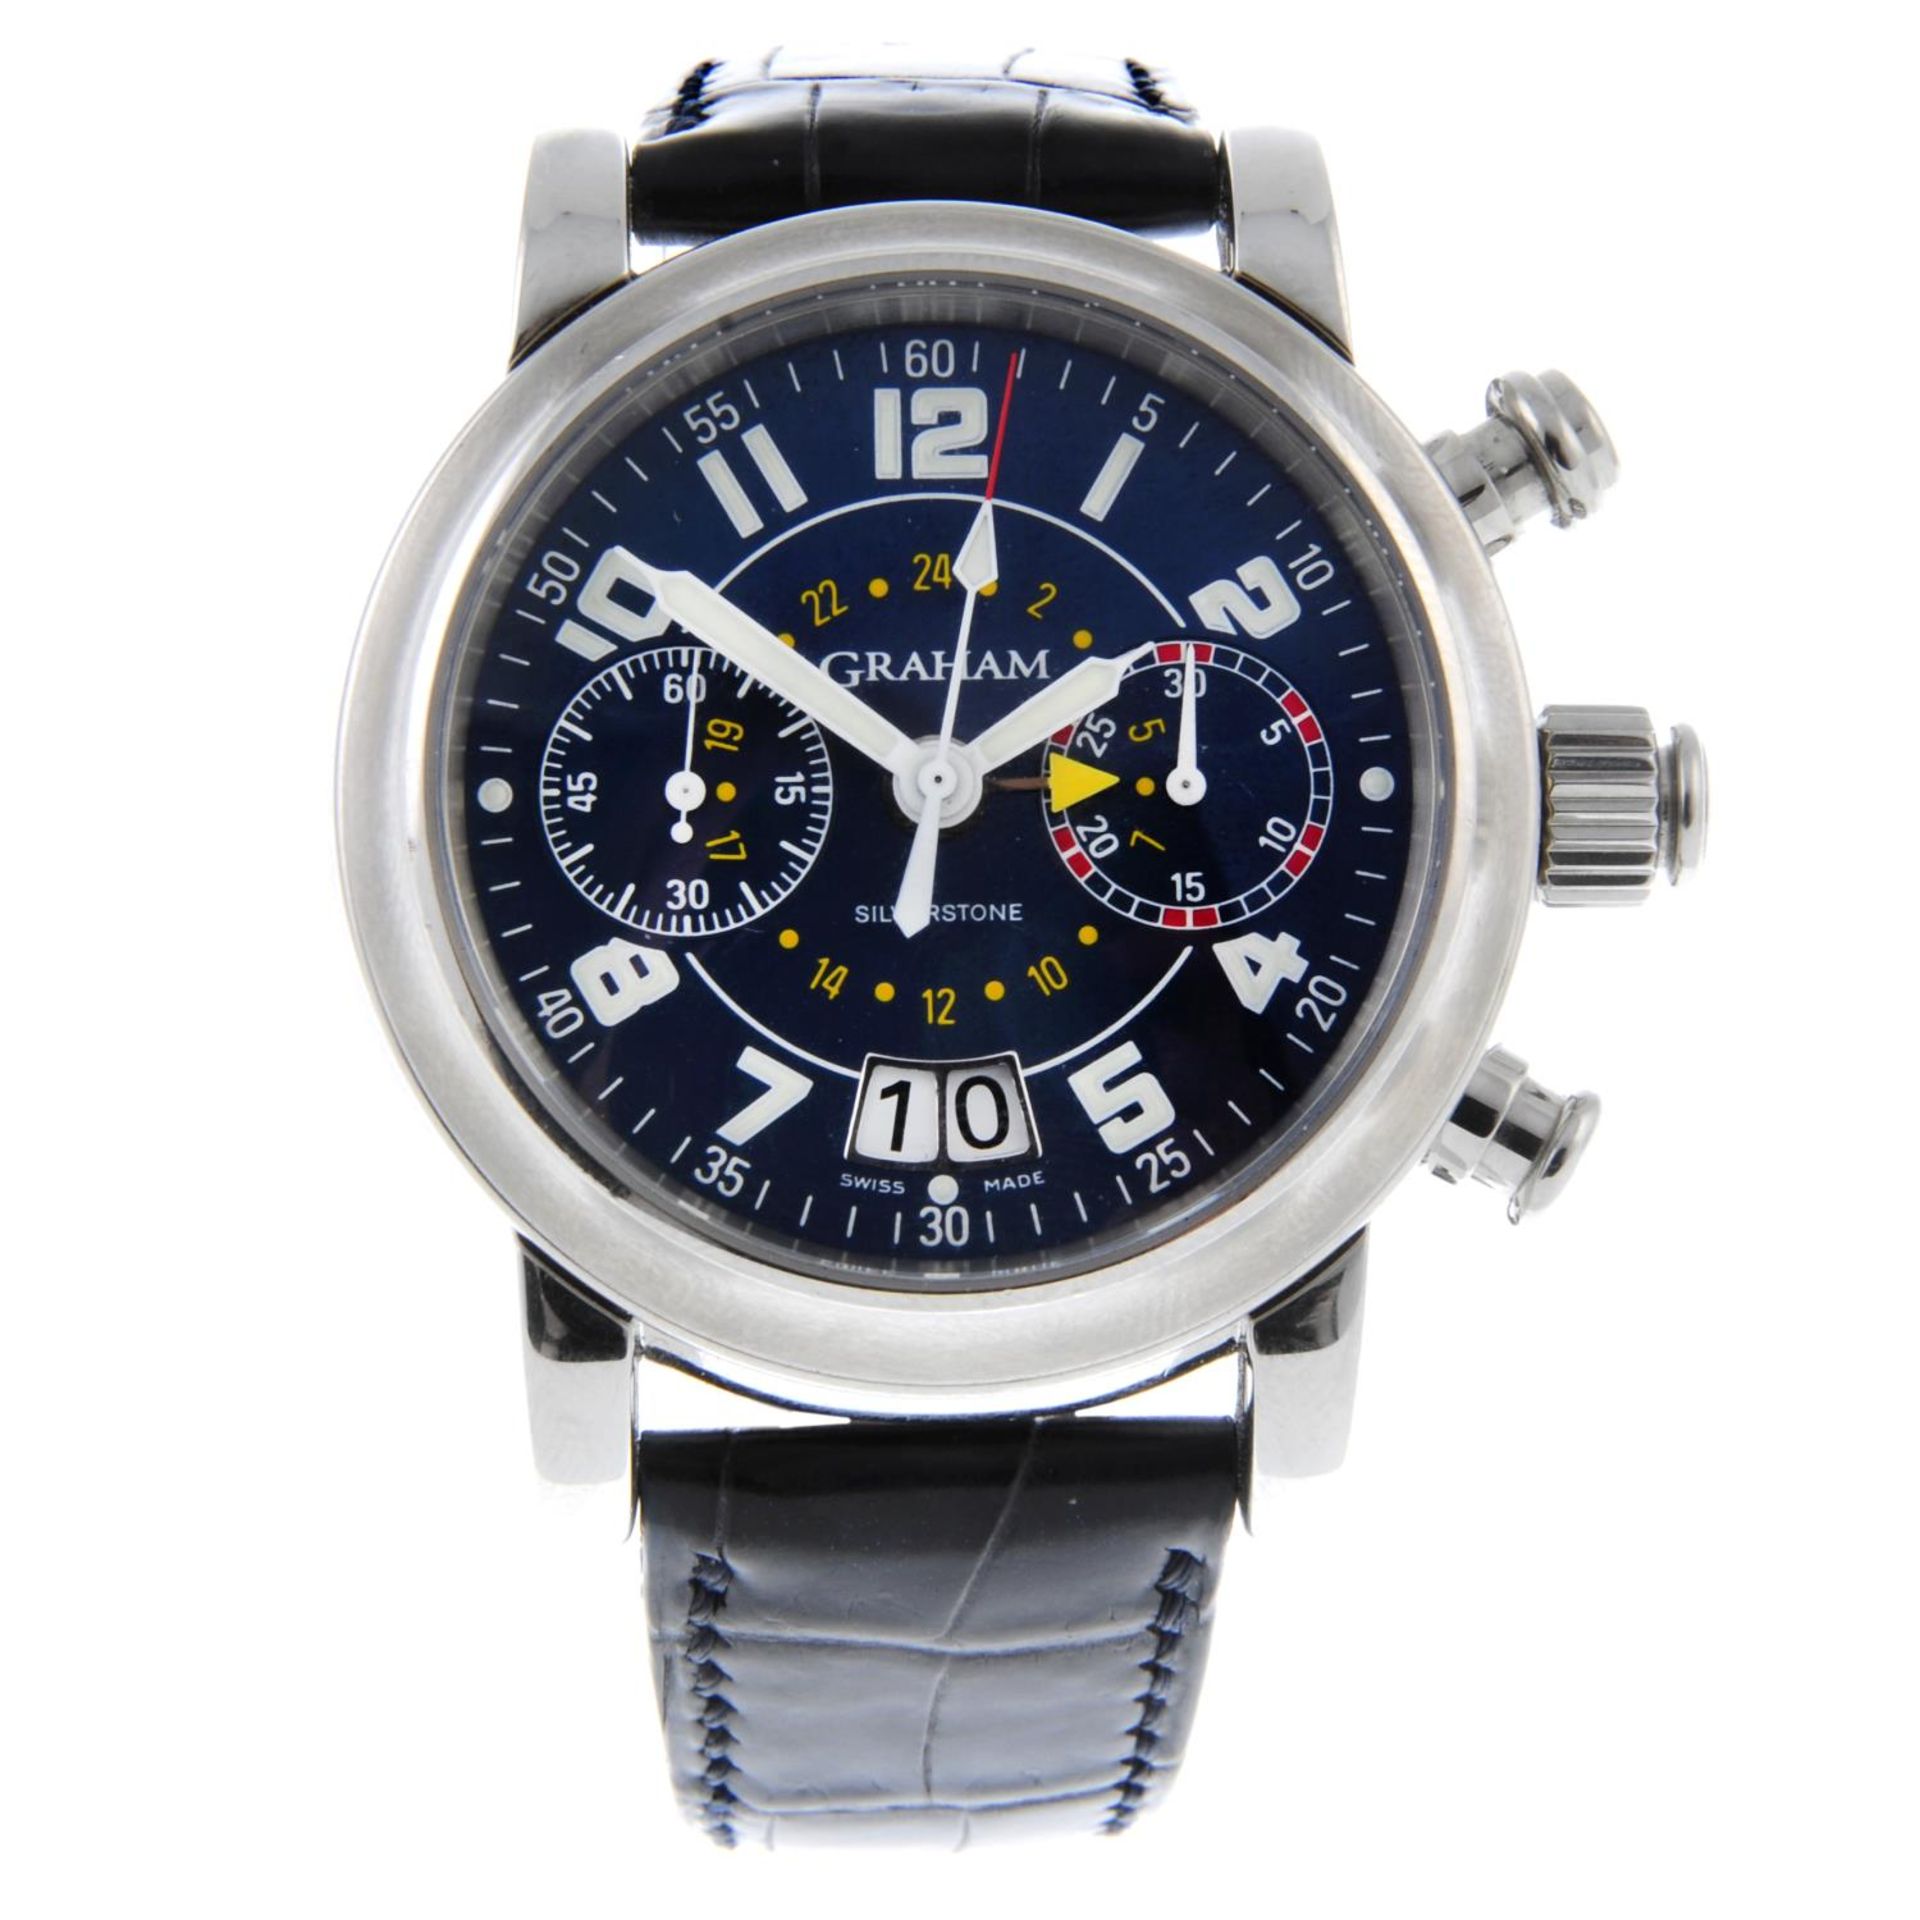 GRAHAM - a gentleman's Silverstone GMT chronograph wrist watch.